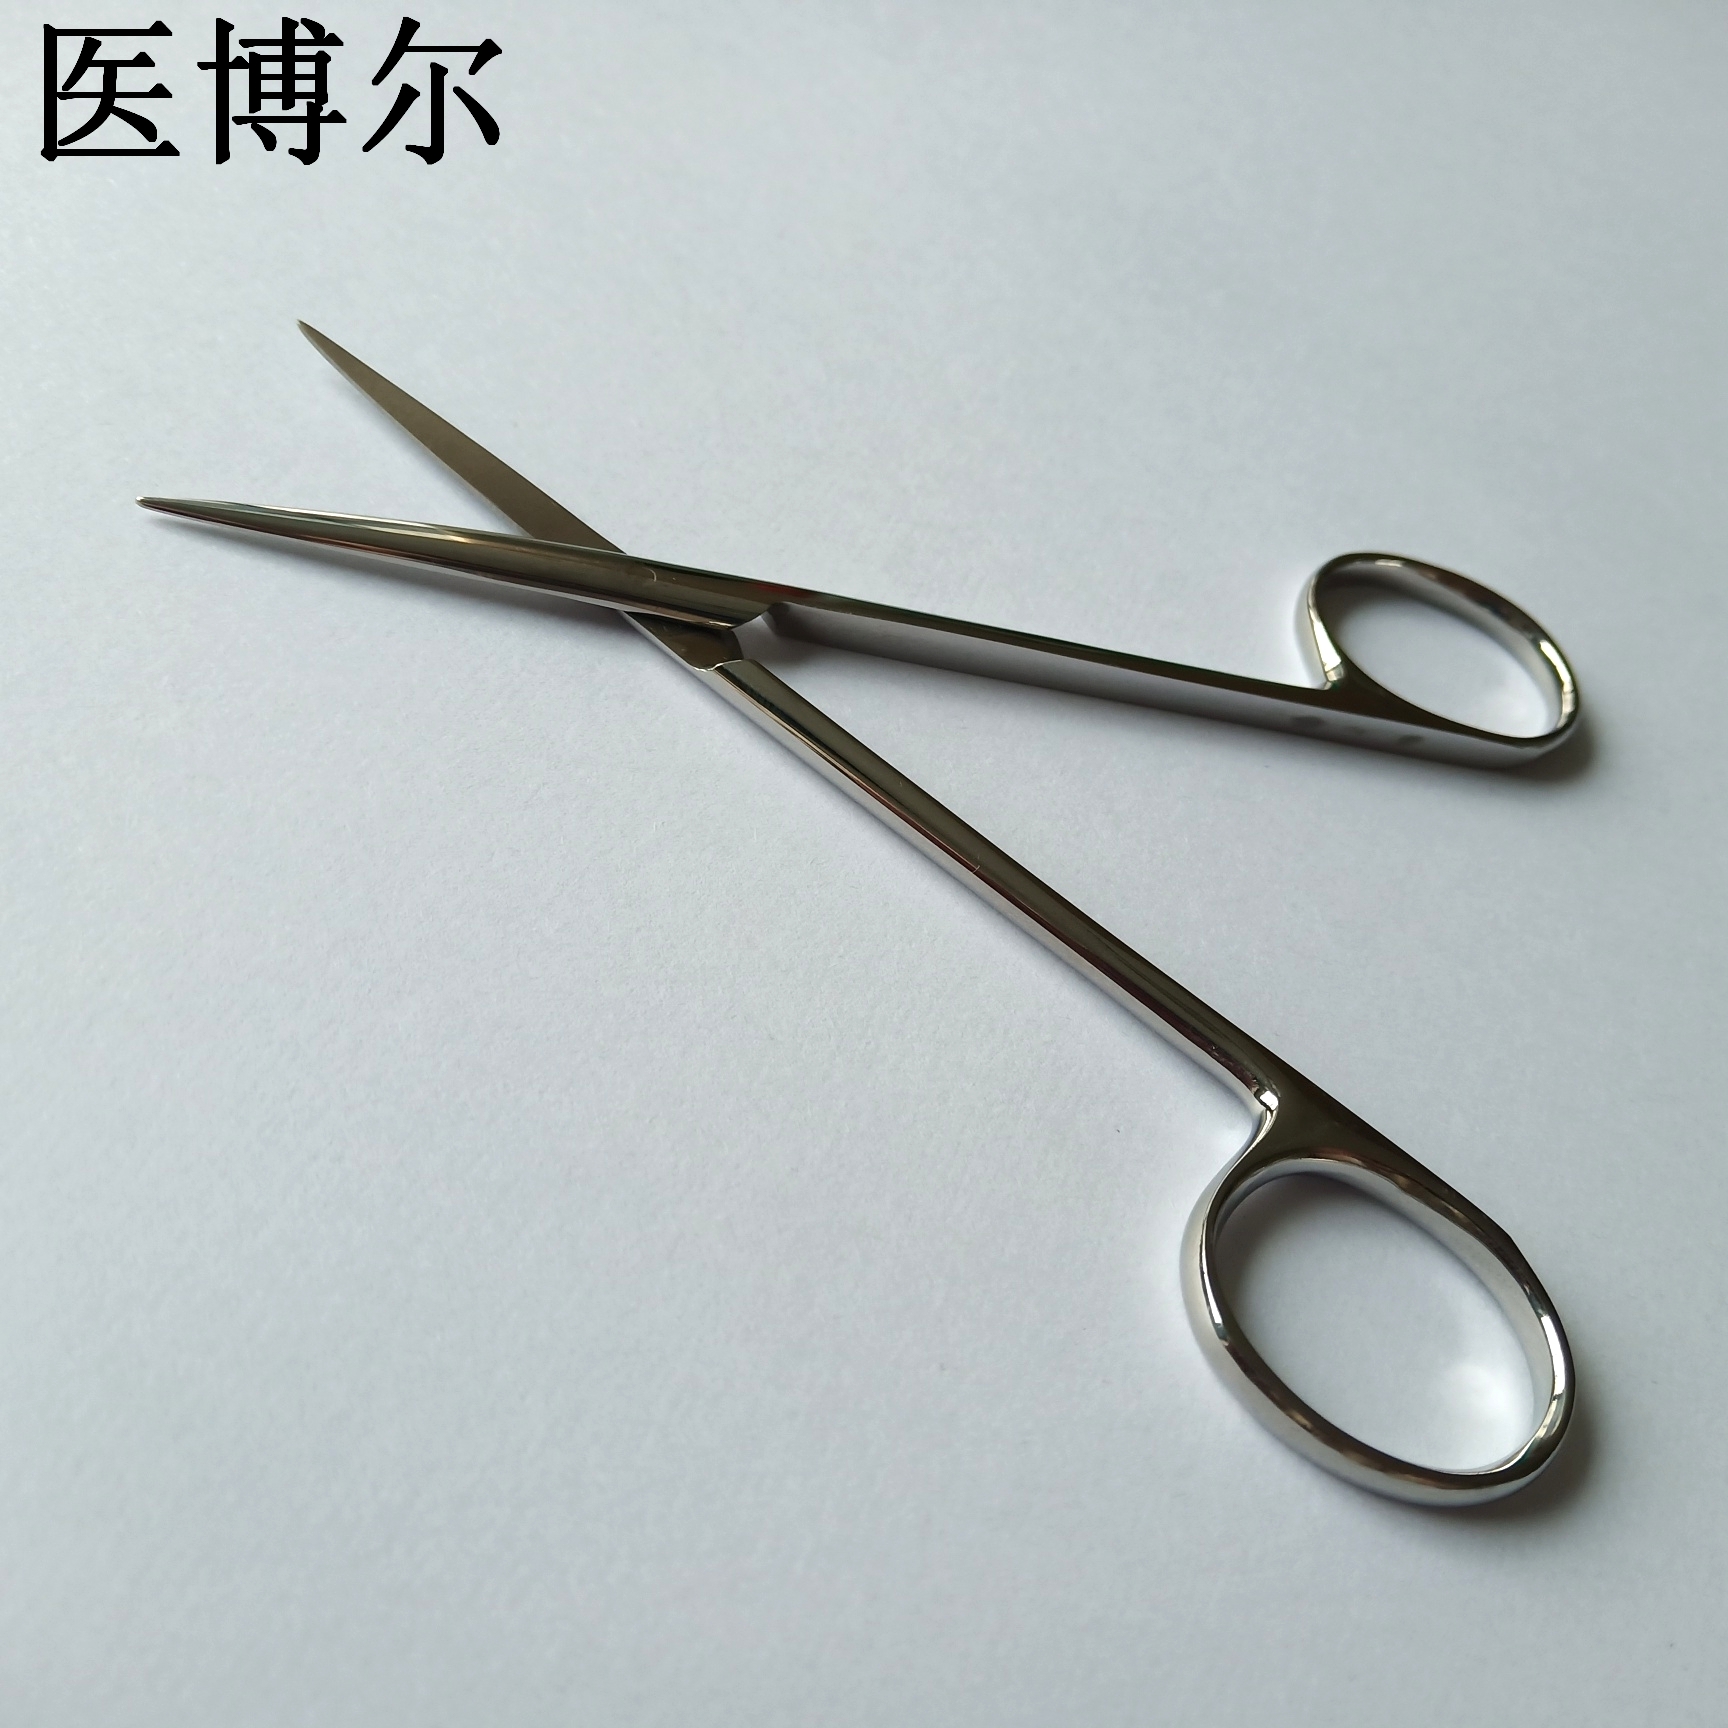 12.5cm精细直尖剪刀 (4)_看图王.jpg